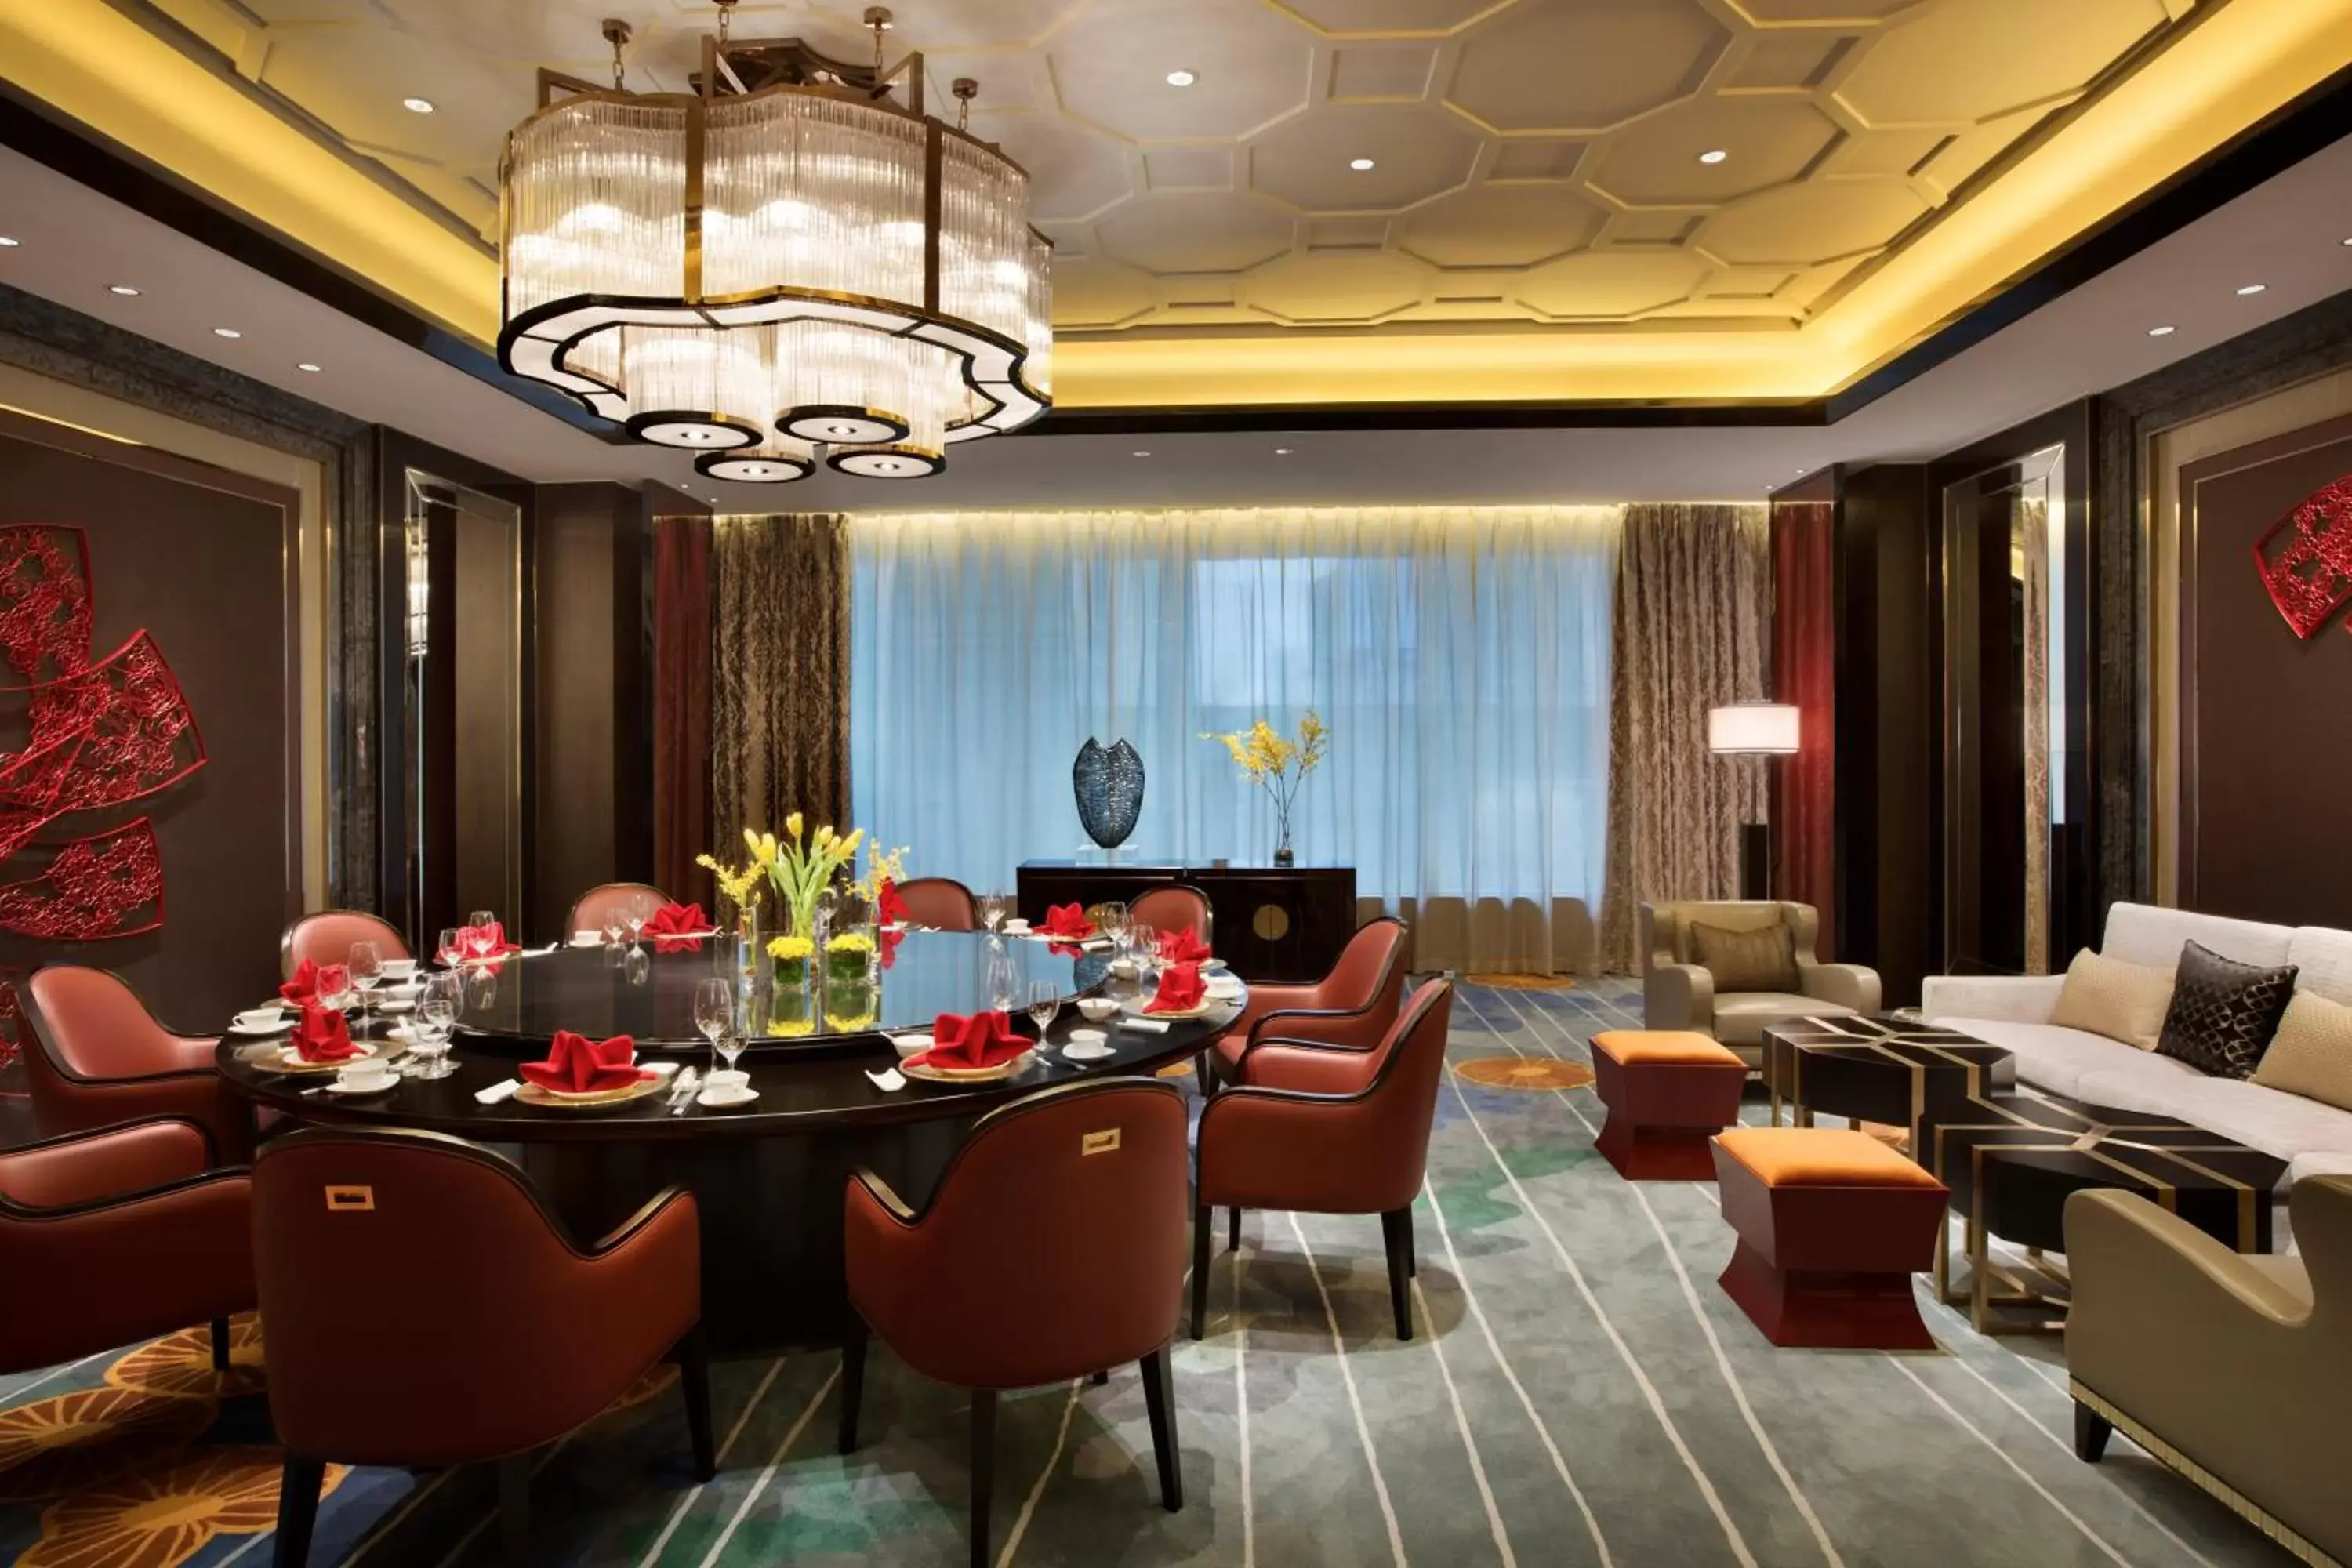 Restaurant/places to eat, Banquet Facilities in Kempinski Hotel Fuzhou